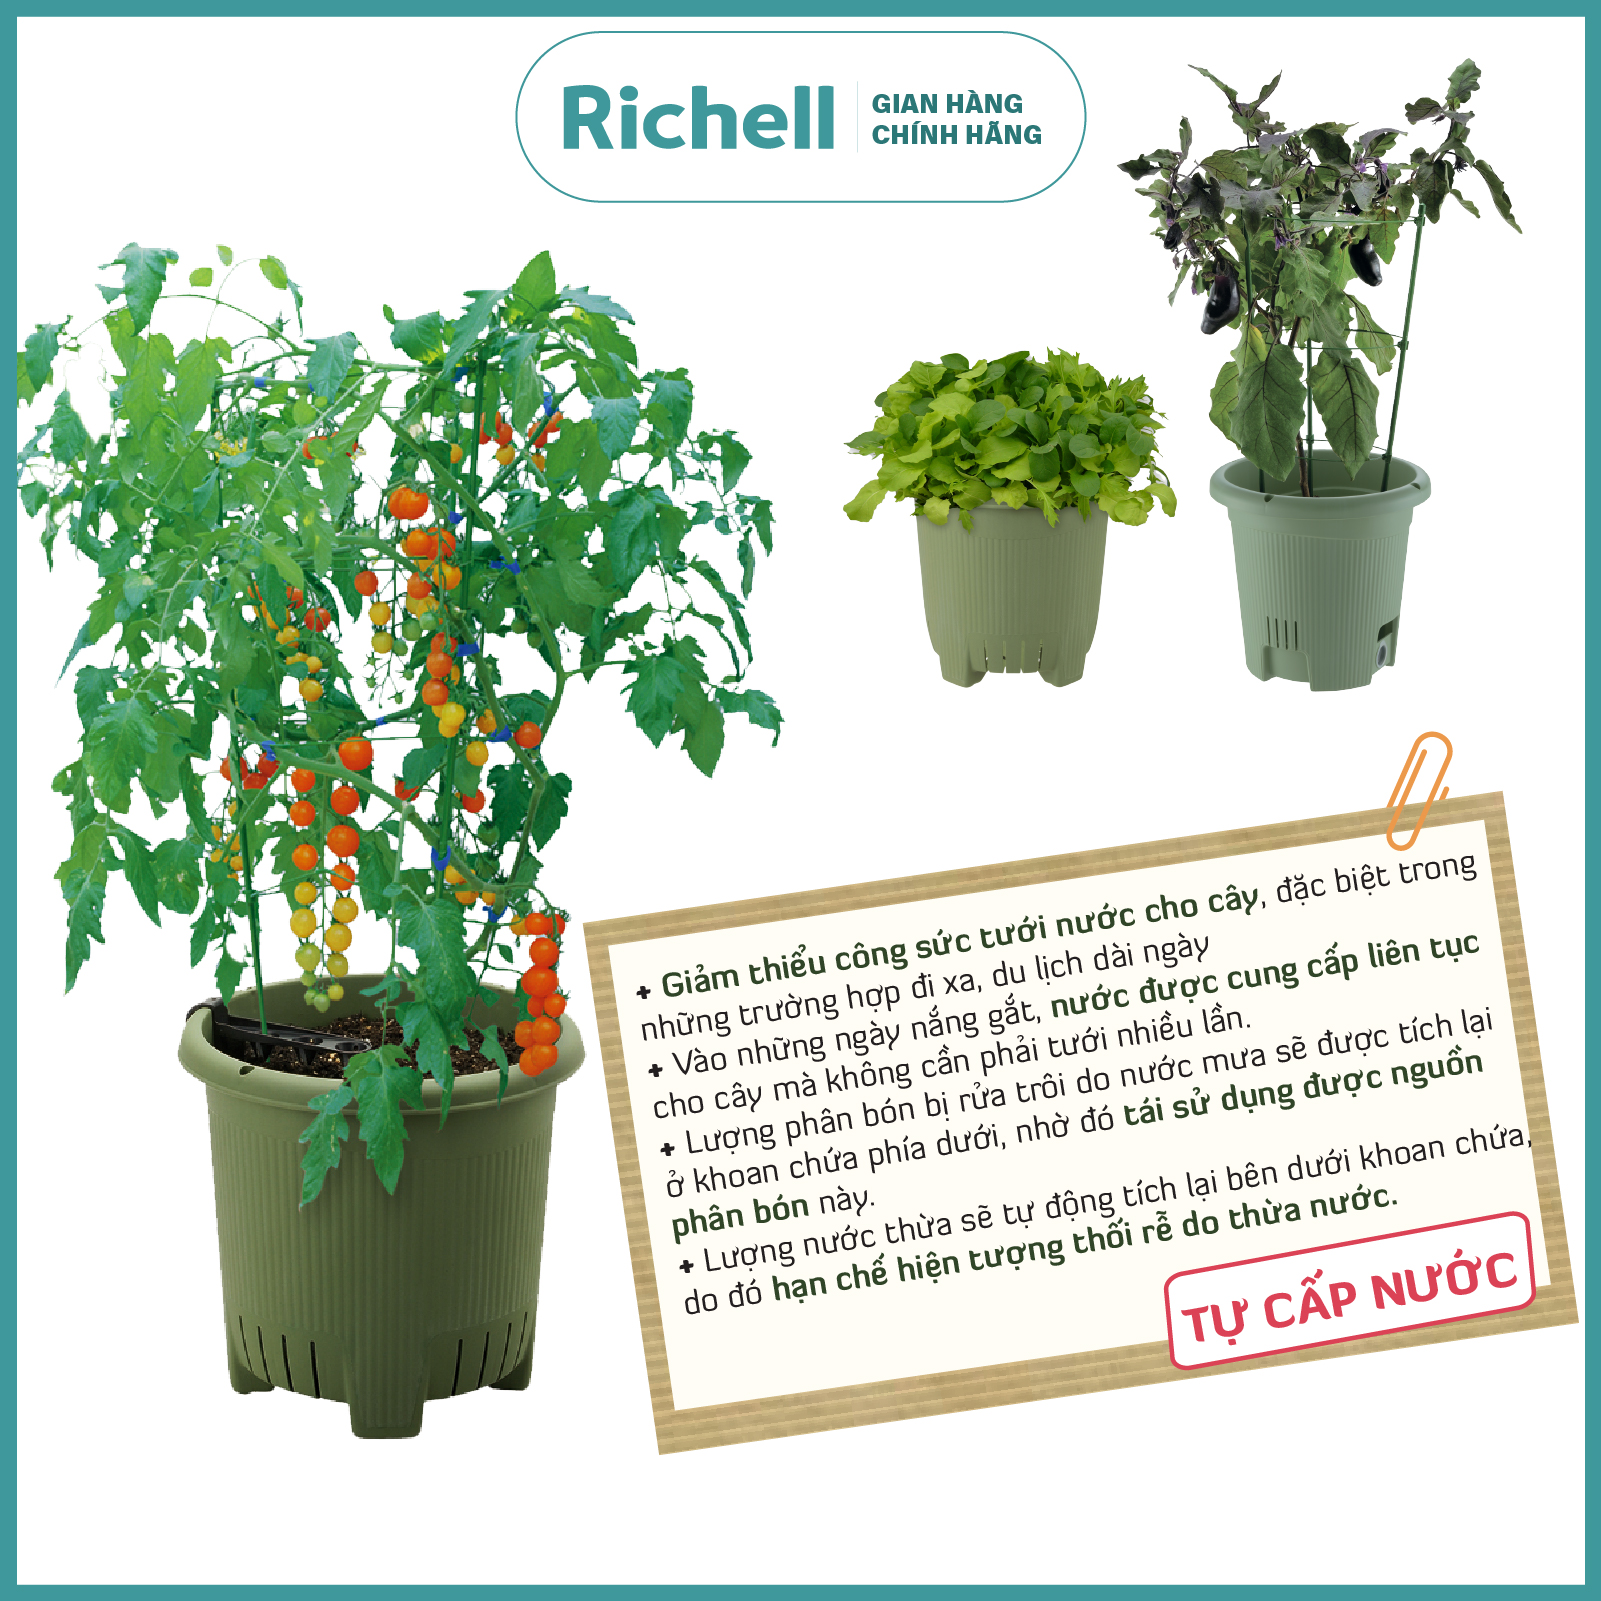 Chậu trồng rau quả Richell